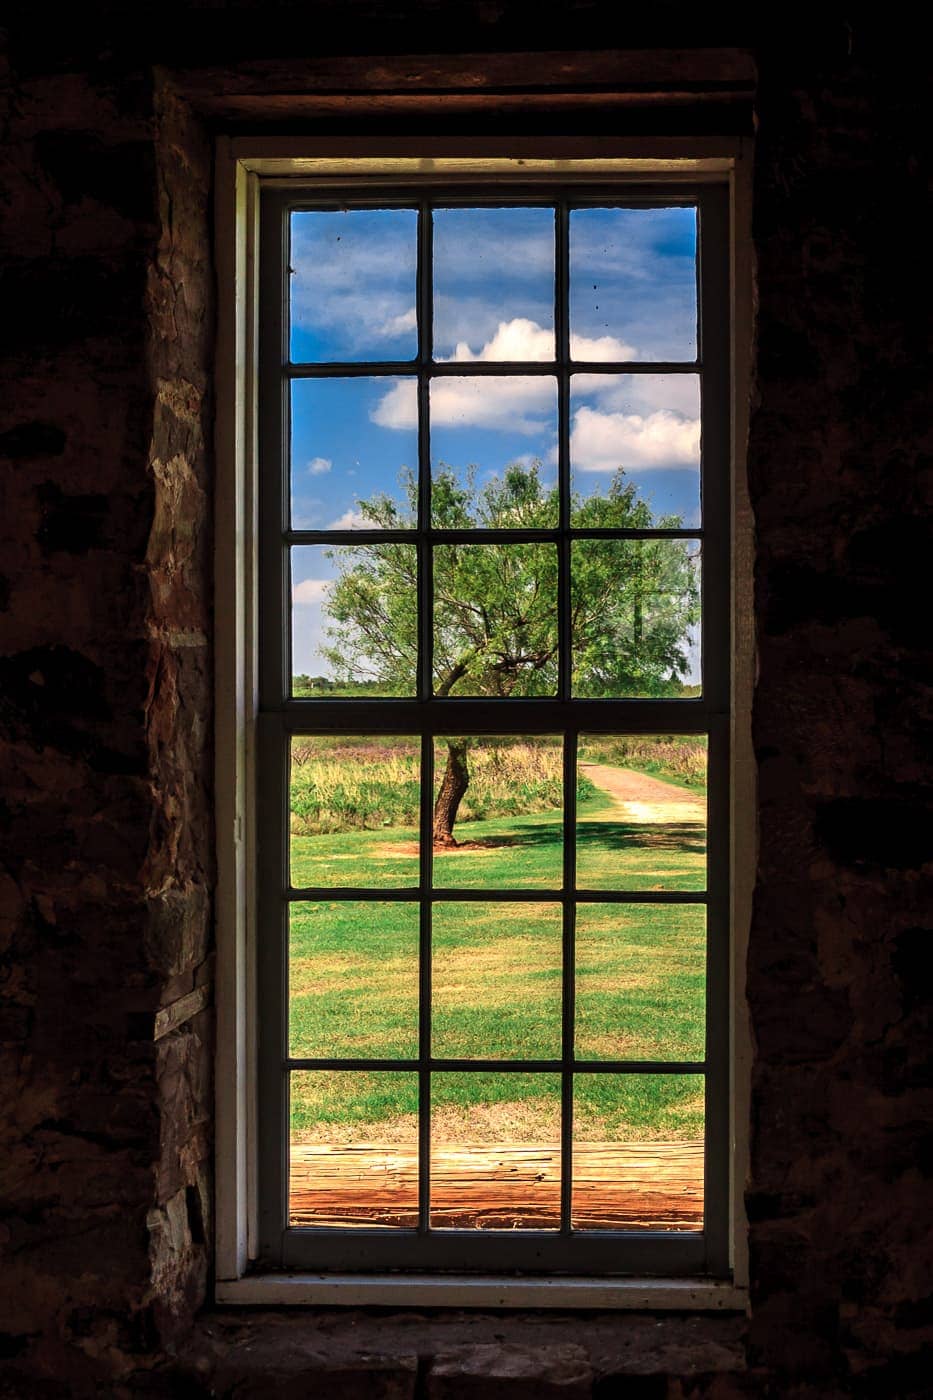 A tree seen through a window at Fort Richardson, Jacksboro, Texas.